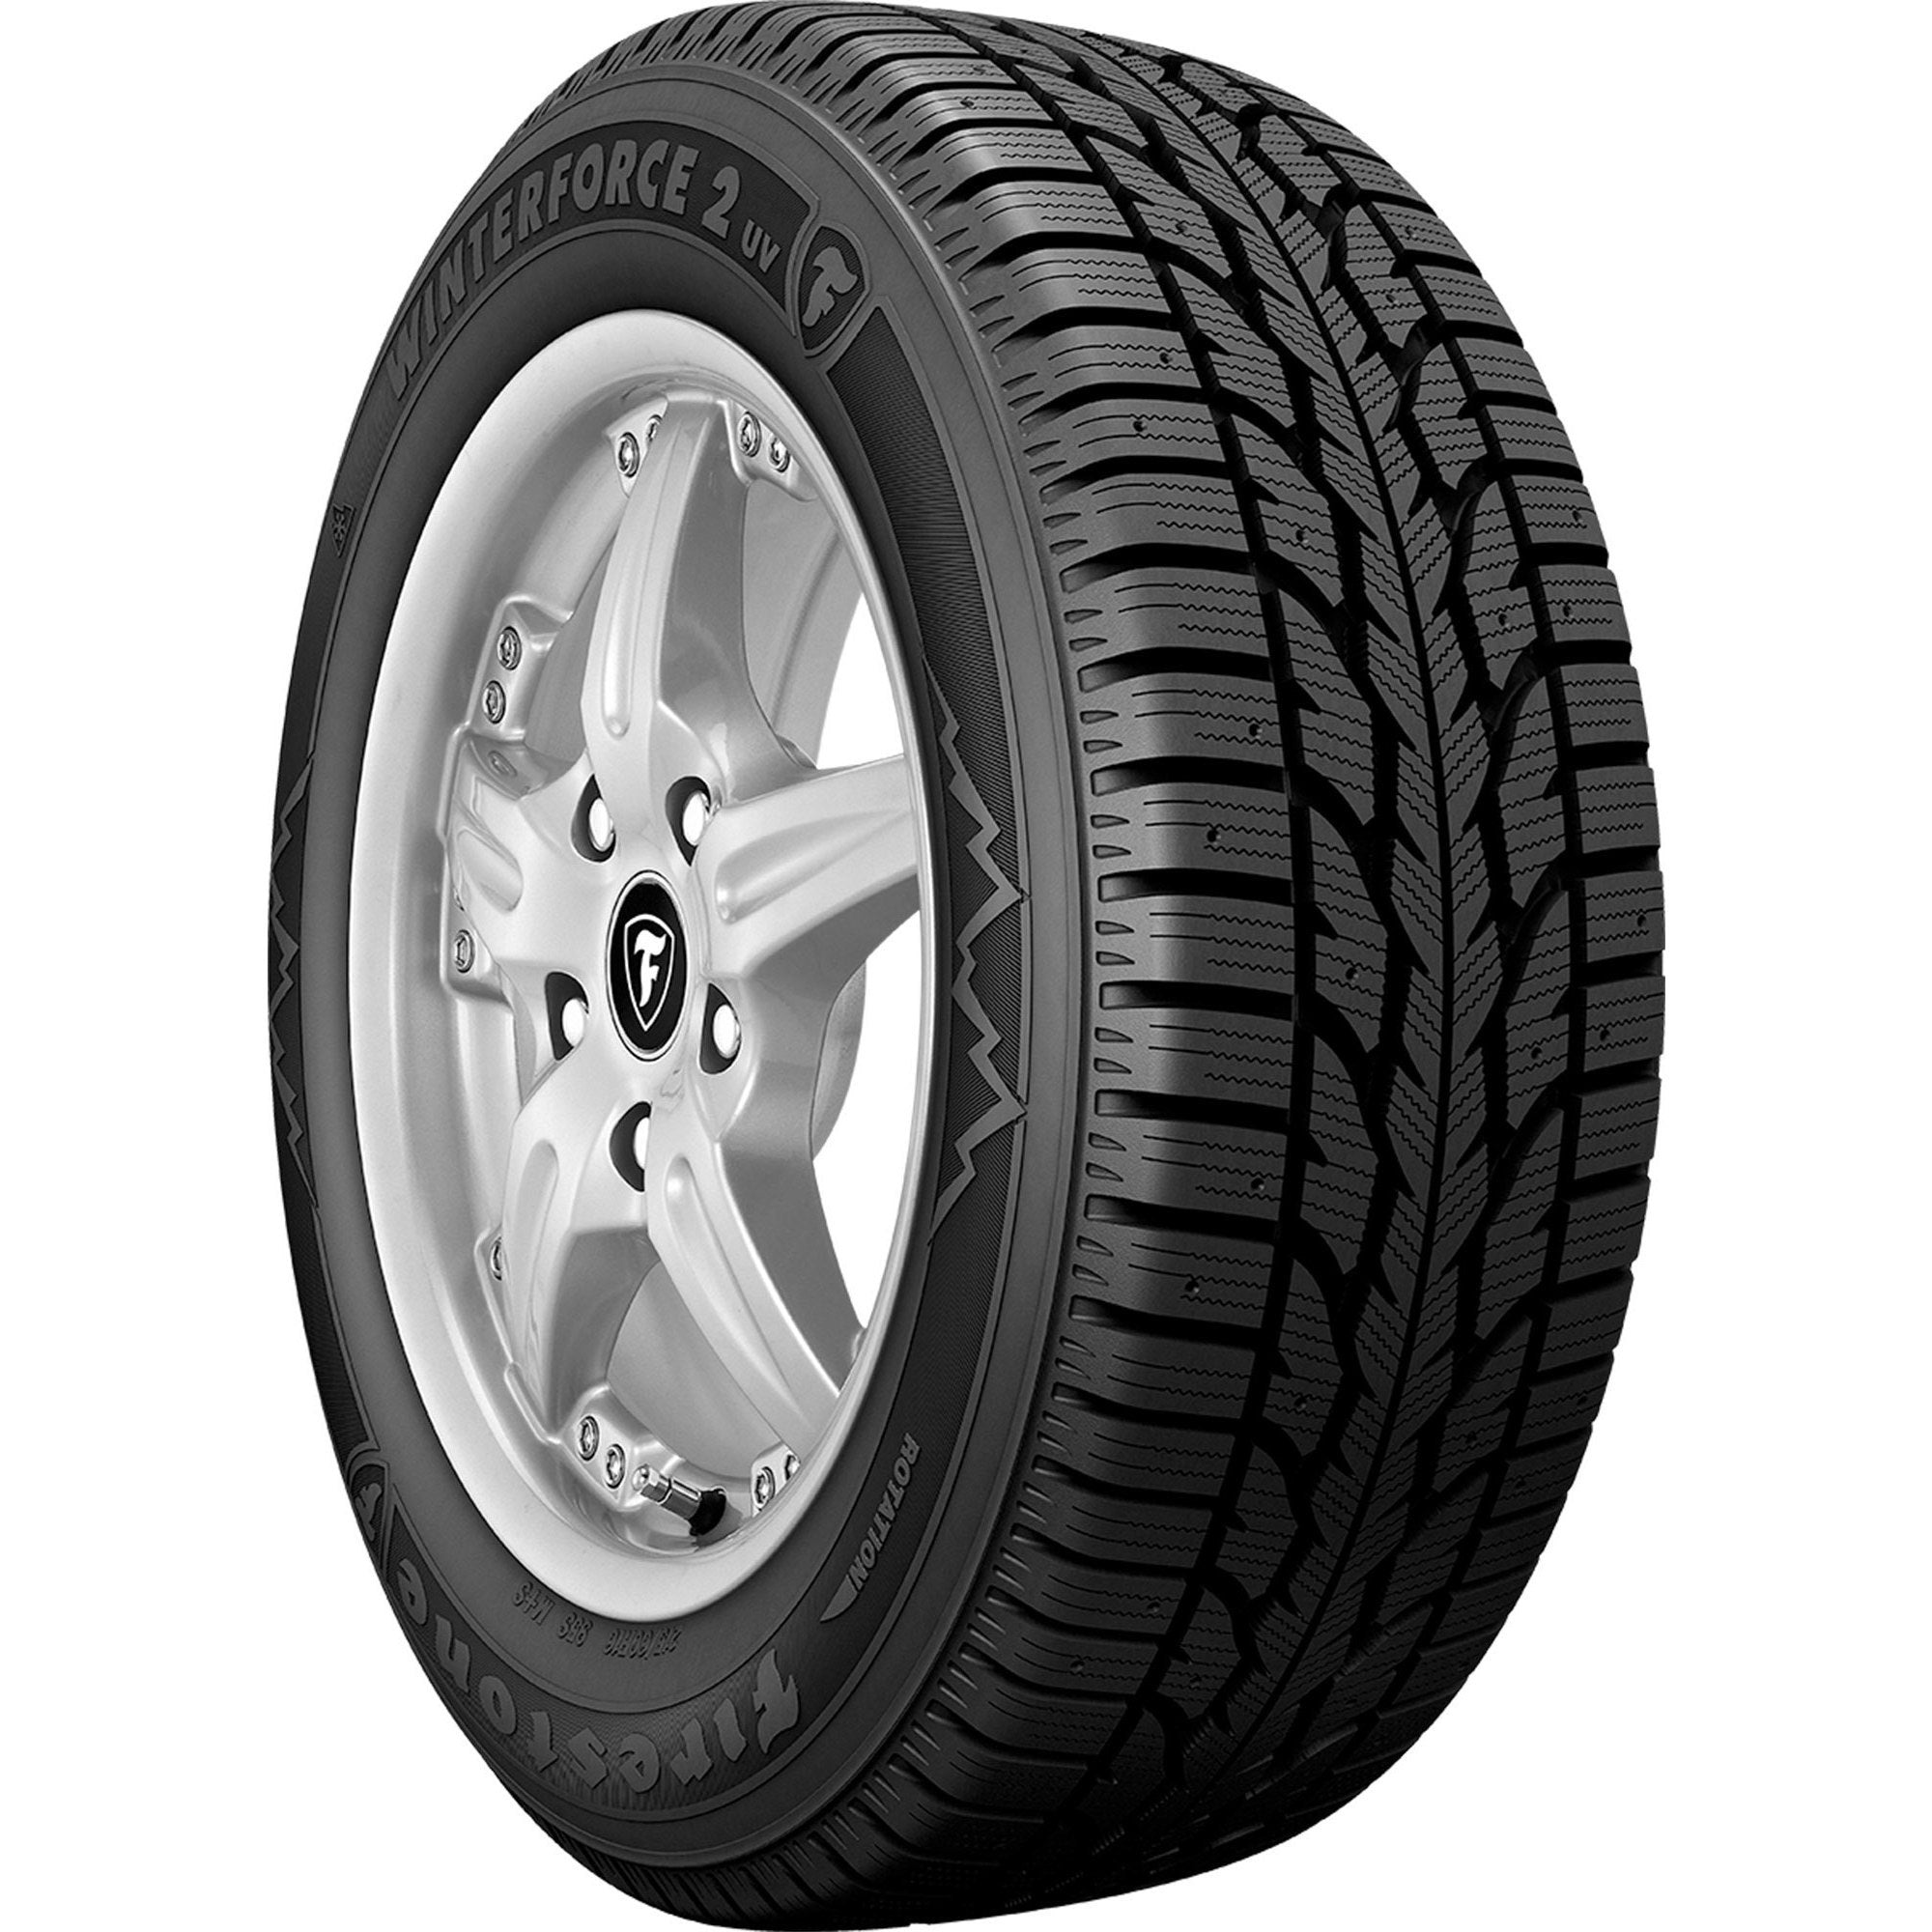 FIRESTONE WINTERFORCE2 UV P265/75R16 (31.7X10.4R 16) Tires